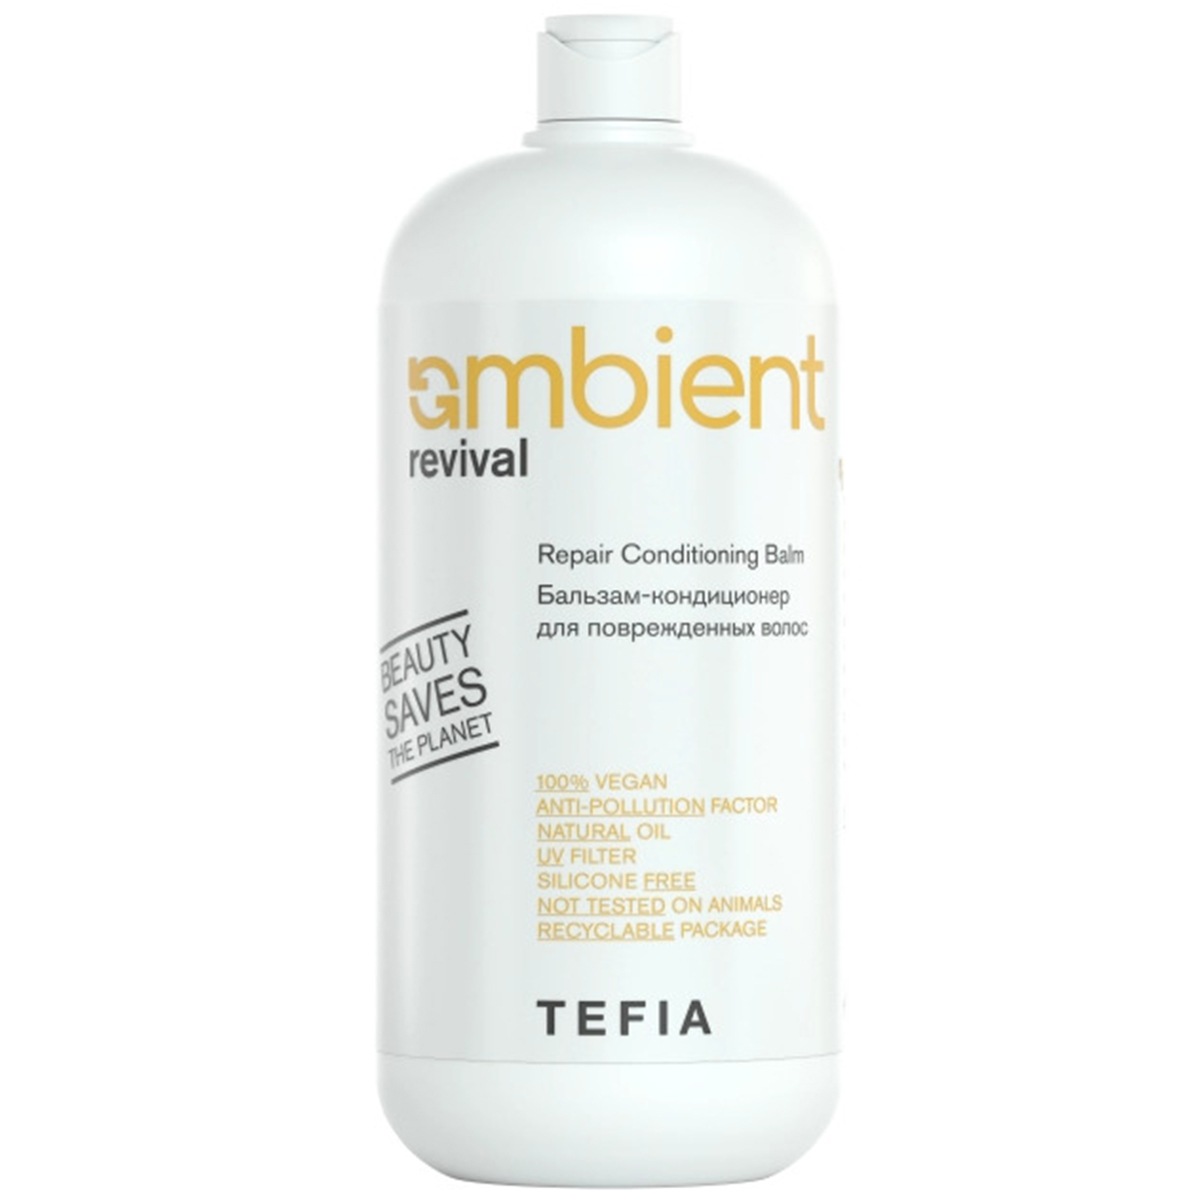 Tefia Бальзам-кондиционер для поврежденных волос, 950 мл (Tefia, Ambient) tefia ambient revival шампунь для поврежденных волос 950 мл